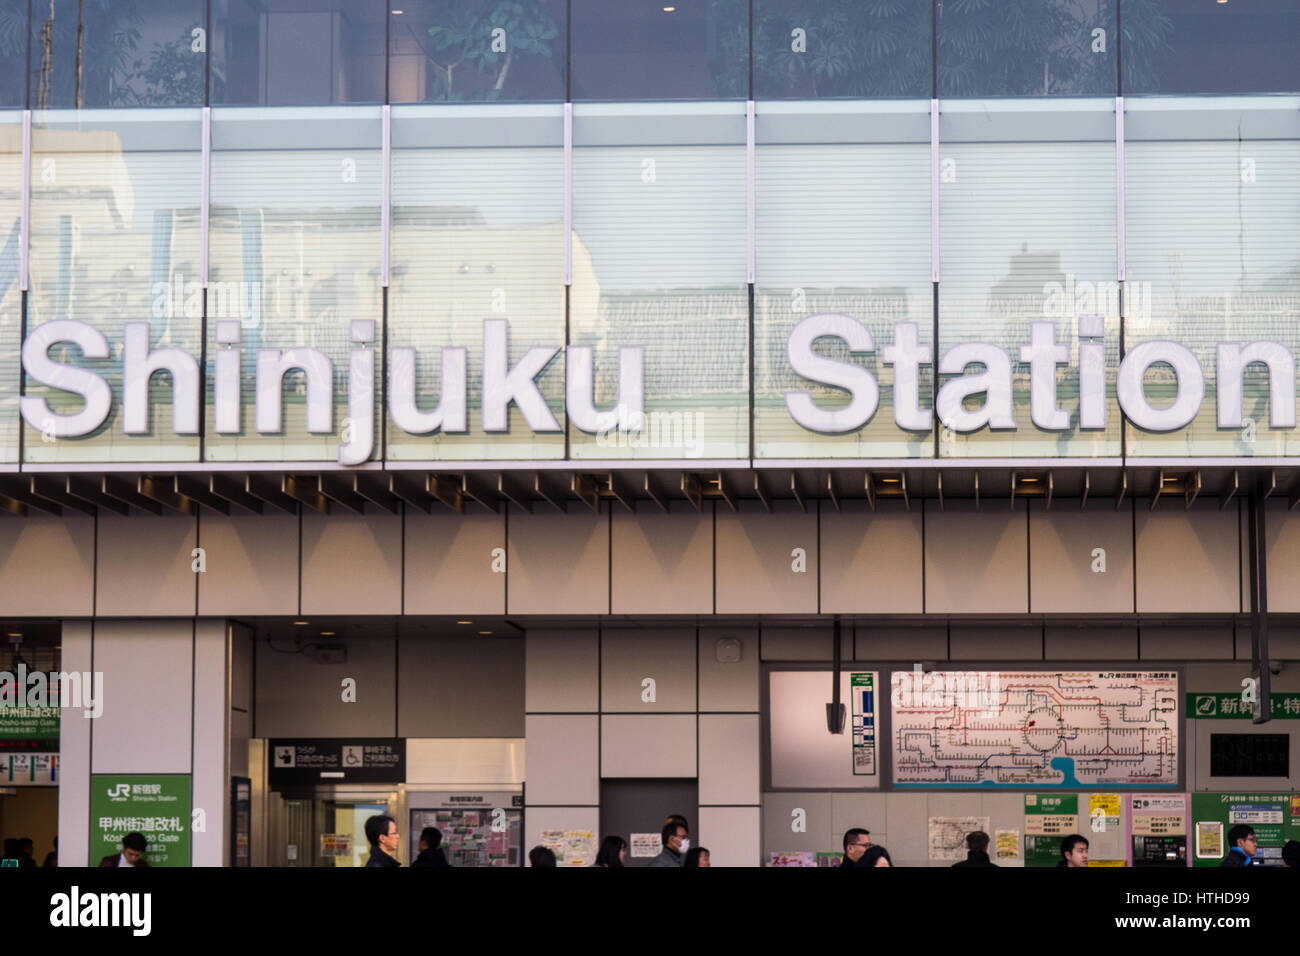 Overhead sign for Shinjuku Train Station. Stock Photo